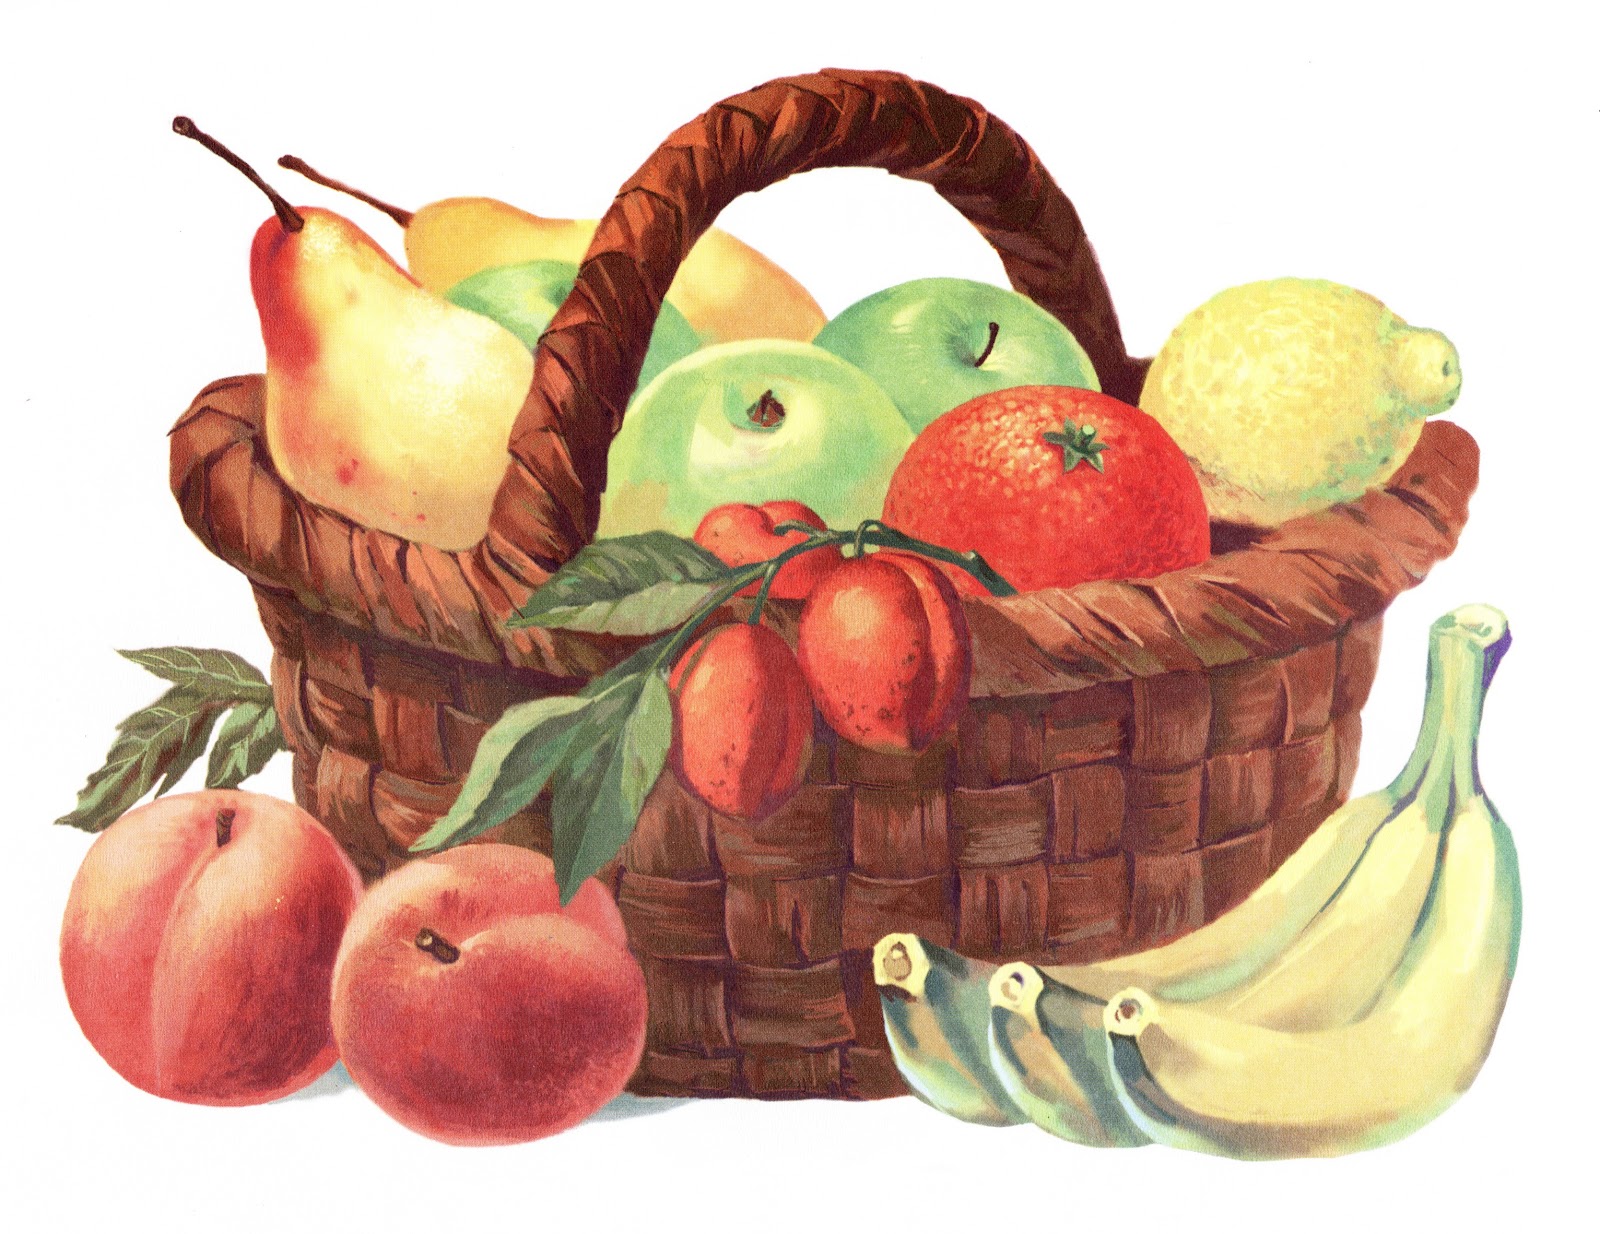 Картинки Овощи В Корзинке Для Детского Сада